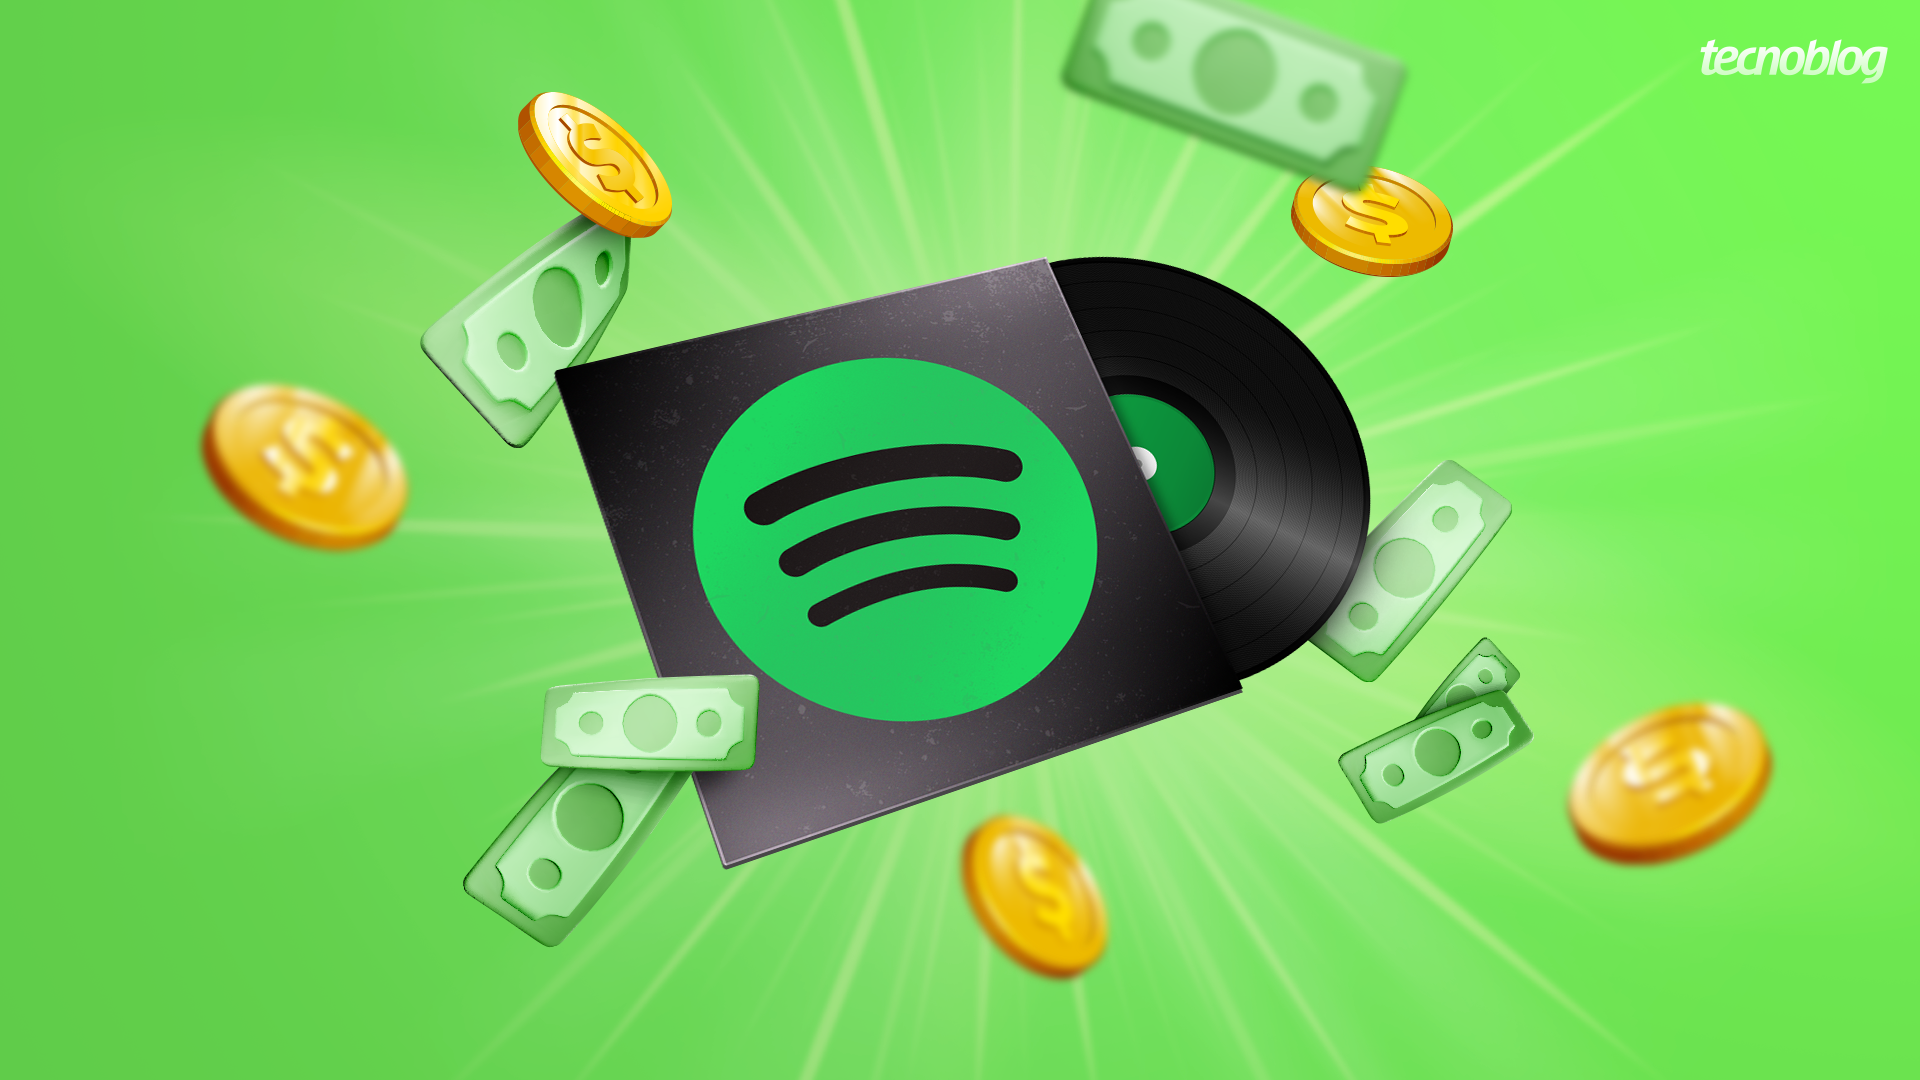 Spotify aumenta preços no Brasil; saiba os valores – Tecnoblog